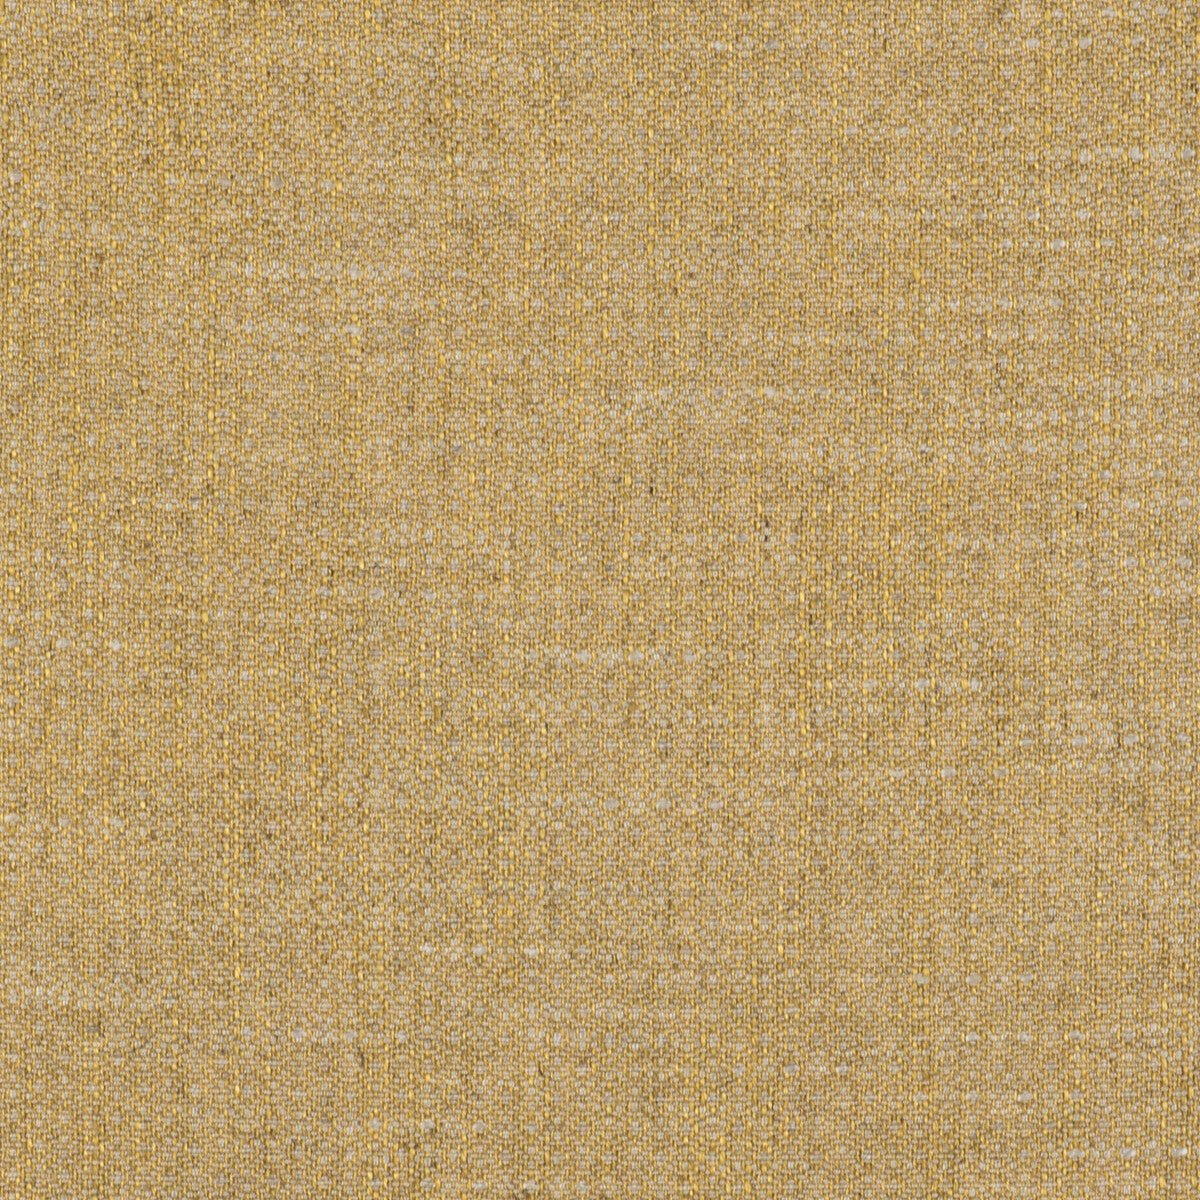 Semilla fabric in oro color - pattern GDT5517.005.0 - by Gaston y Daniela in the Gaston Libreria collection